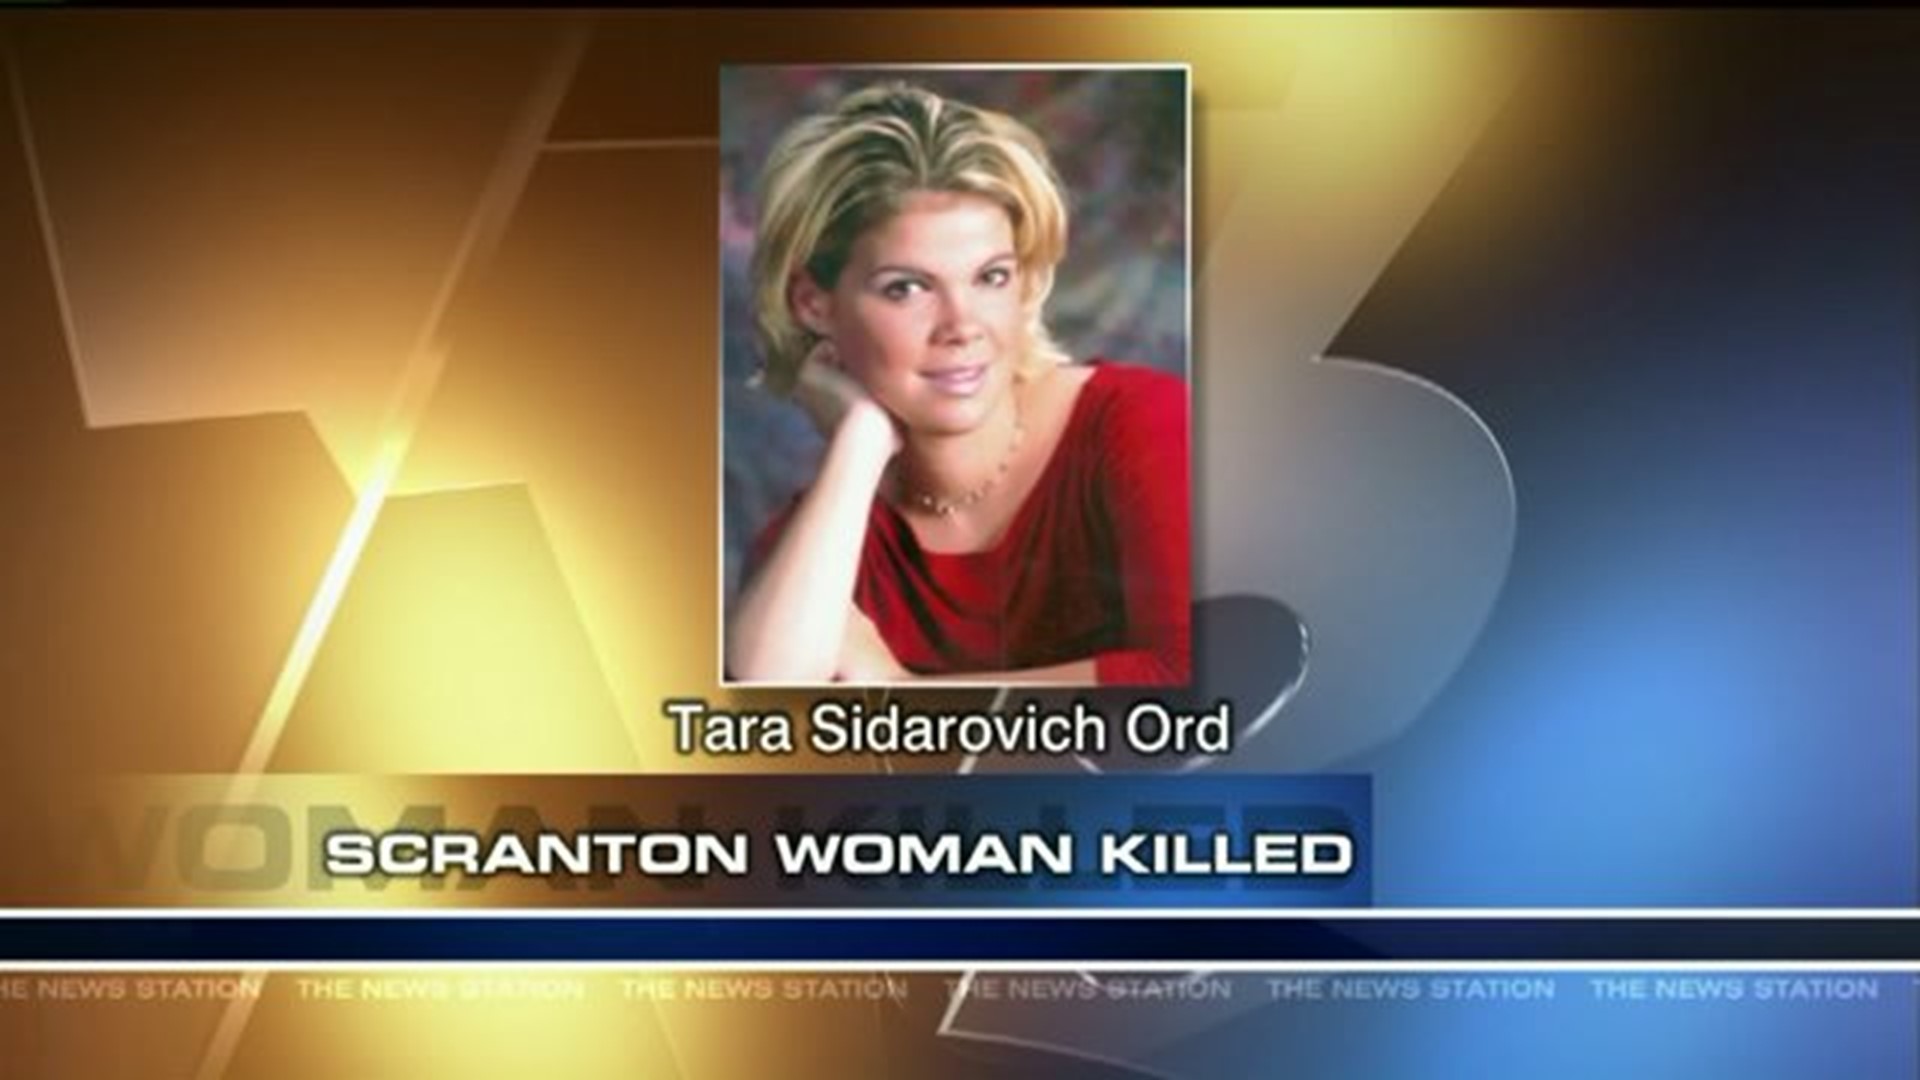 Man Convicted in Florida for Killing Scranton Woman